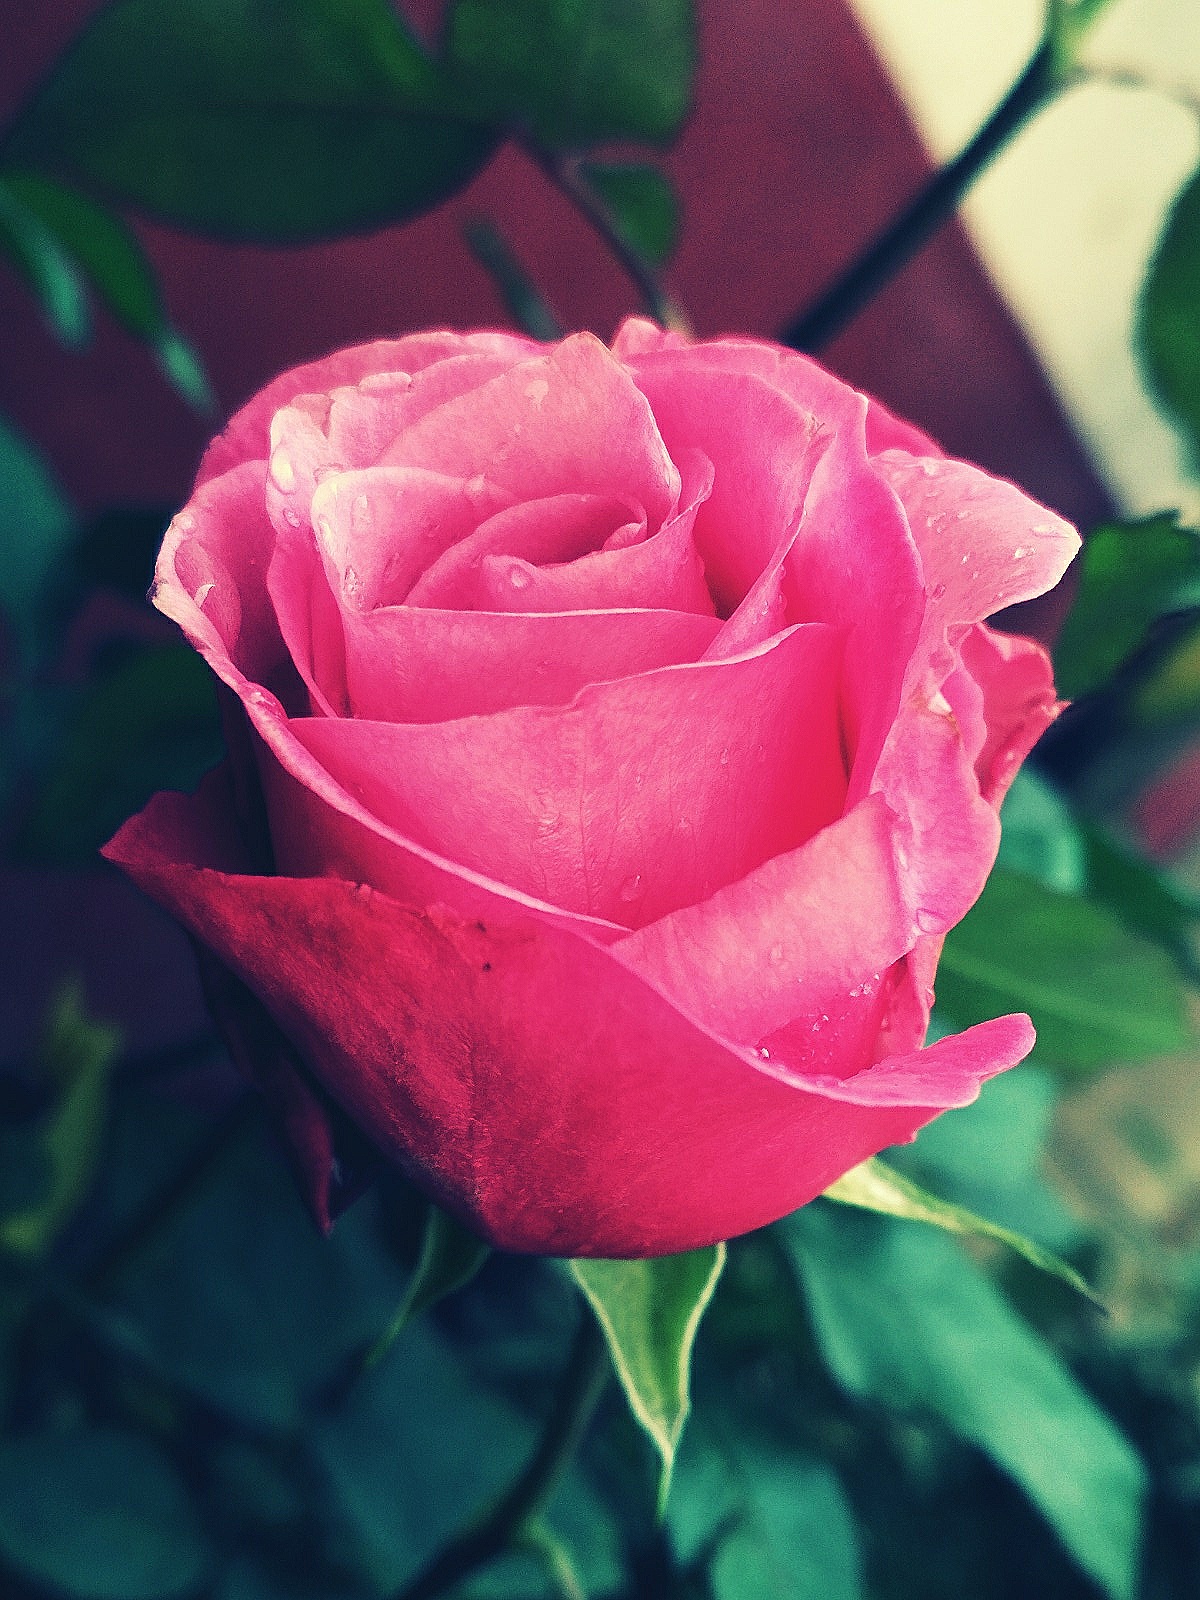 A fresh pink rose